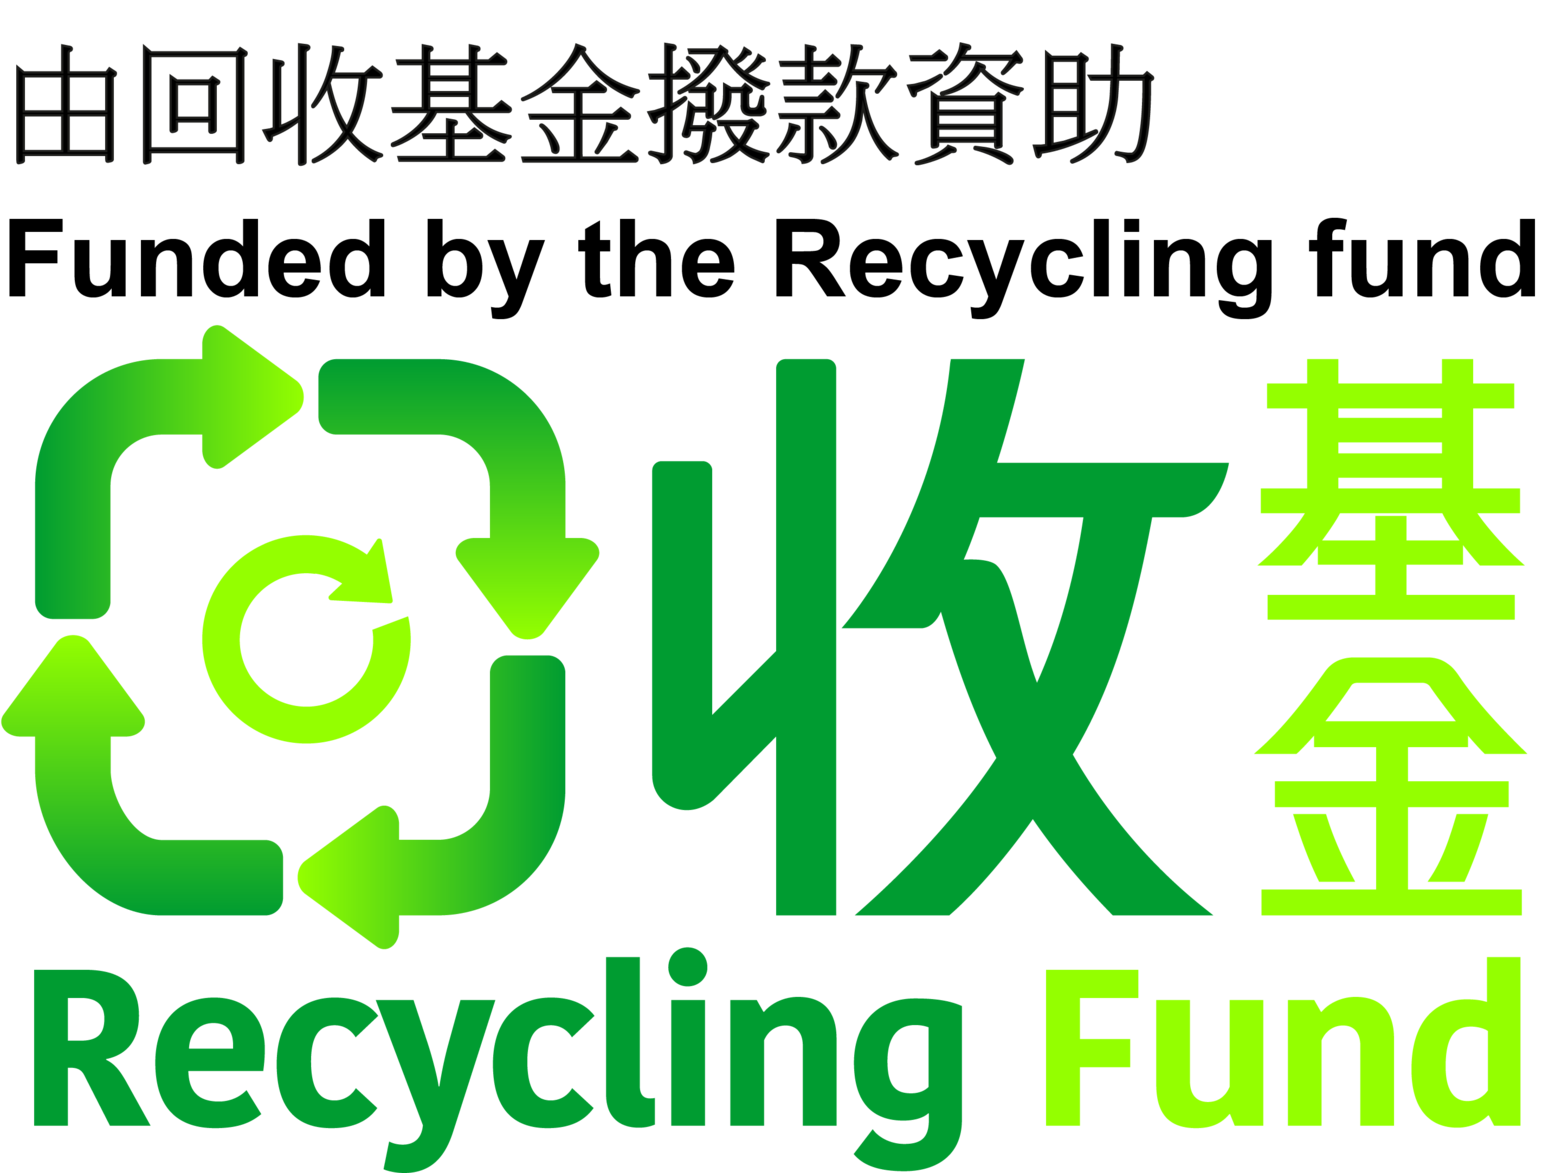 Recycling Fund Logo